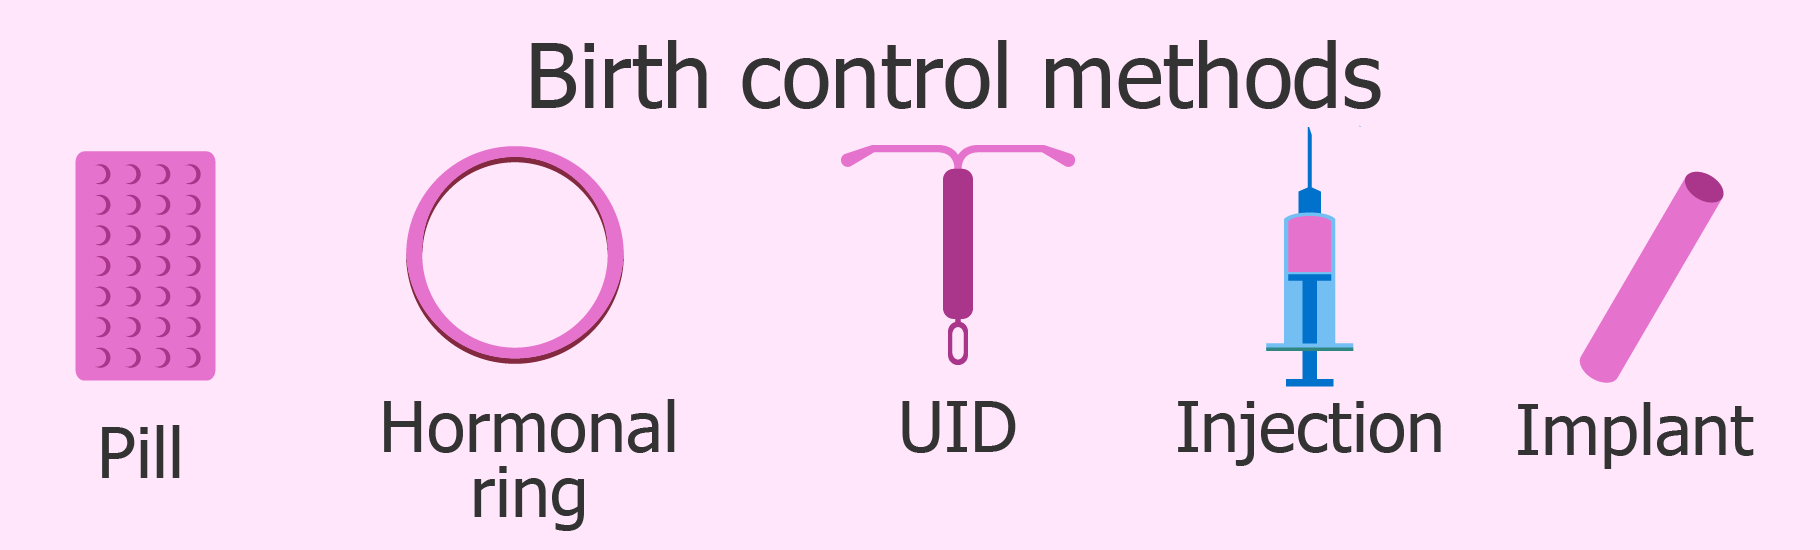 types-of-birth-control-methods.